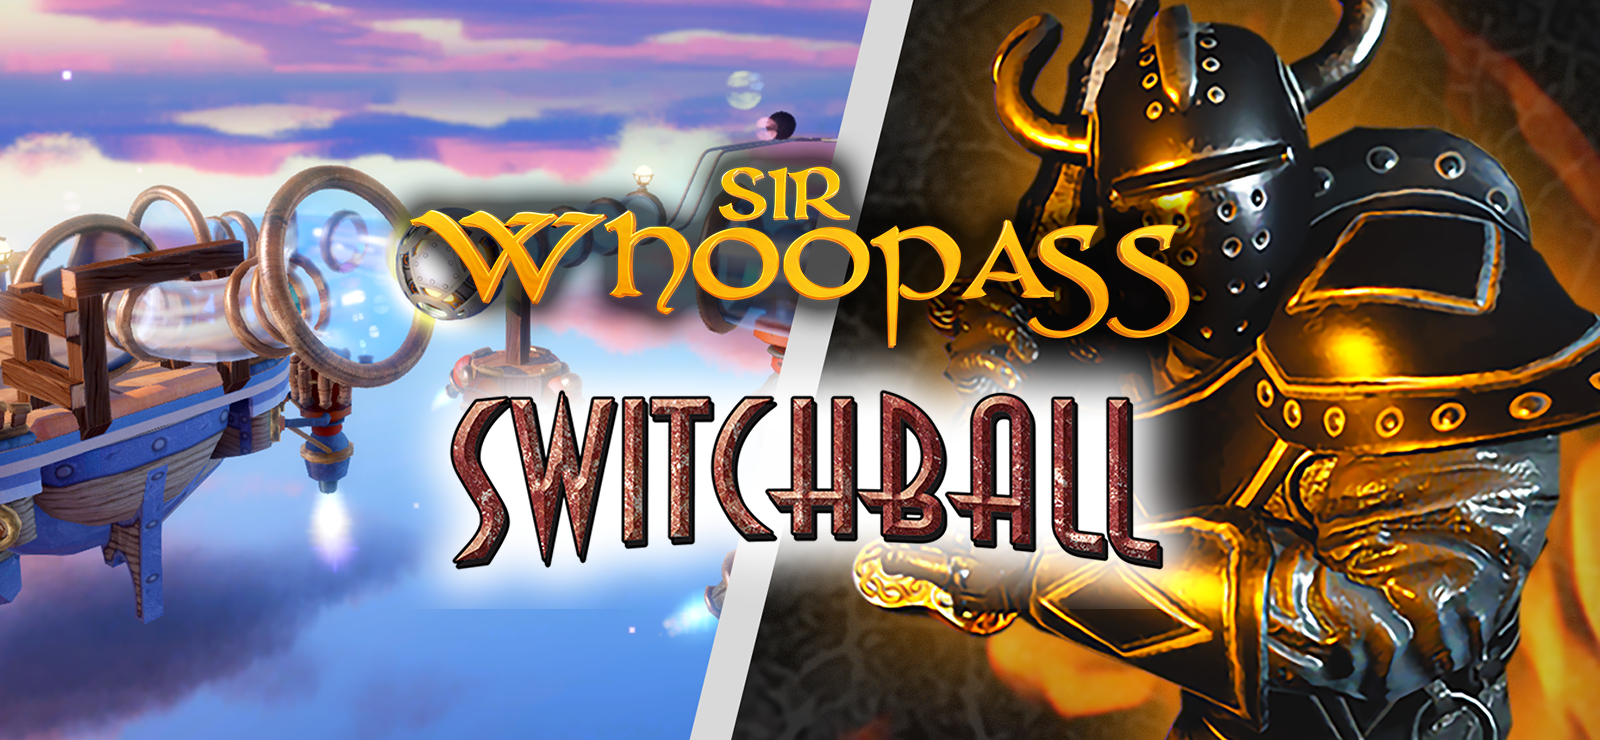 Sir Whoopass & Switchball HD Bundle